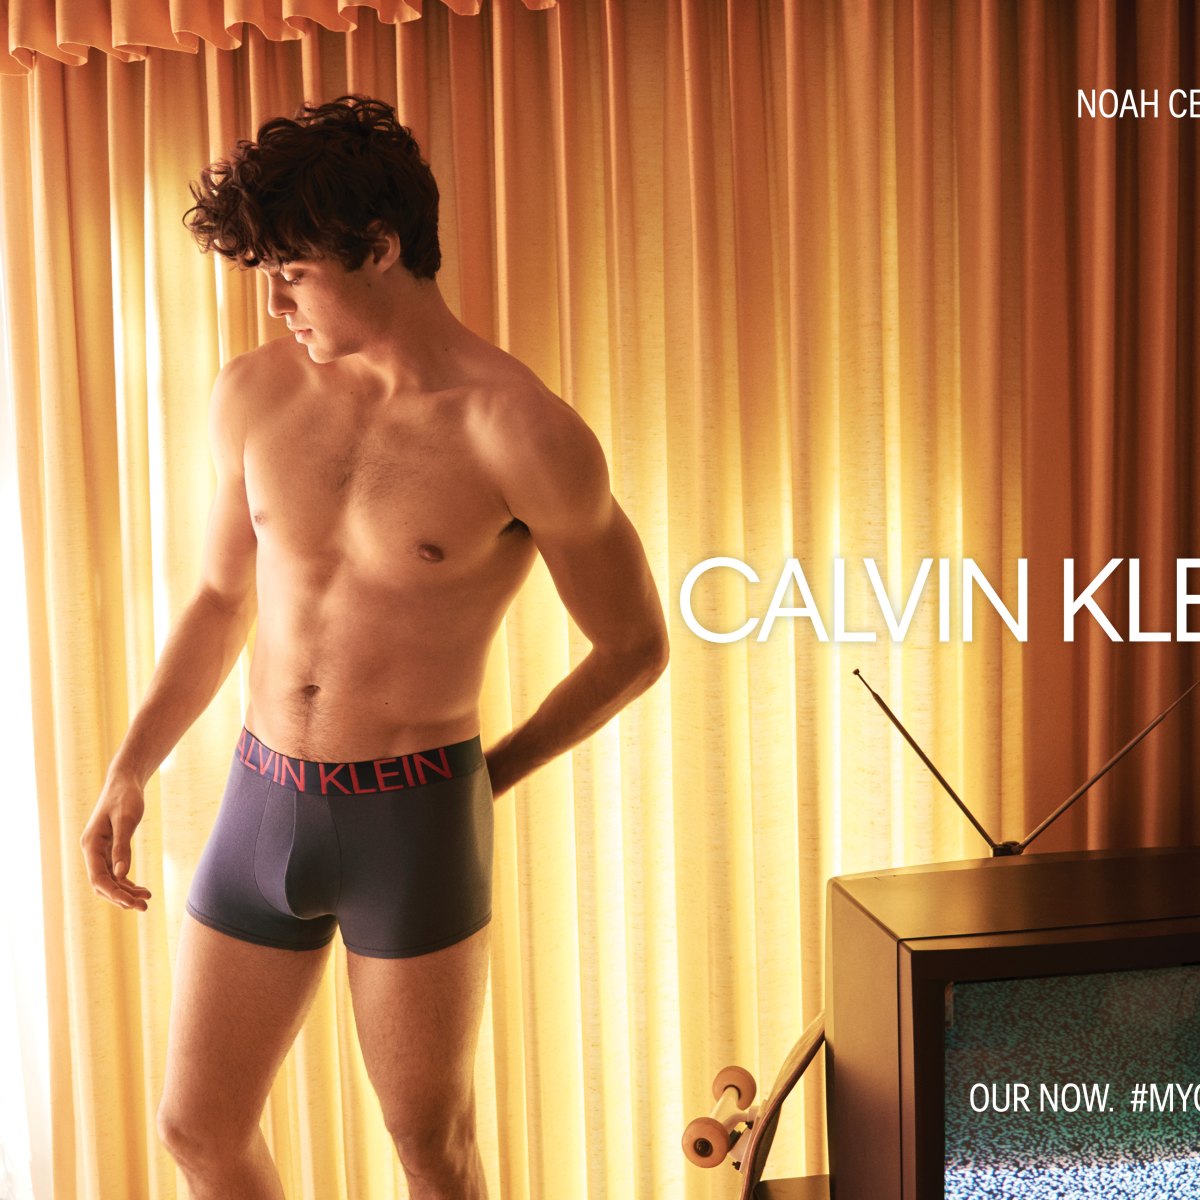 Noah Centineo Calvin Klein Photo Shoot: Shirtless Underwear Pics